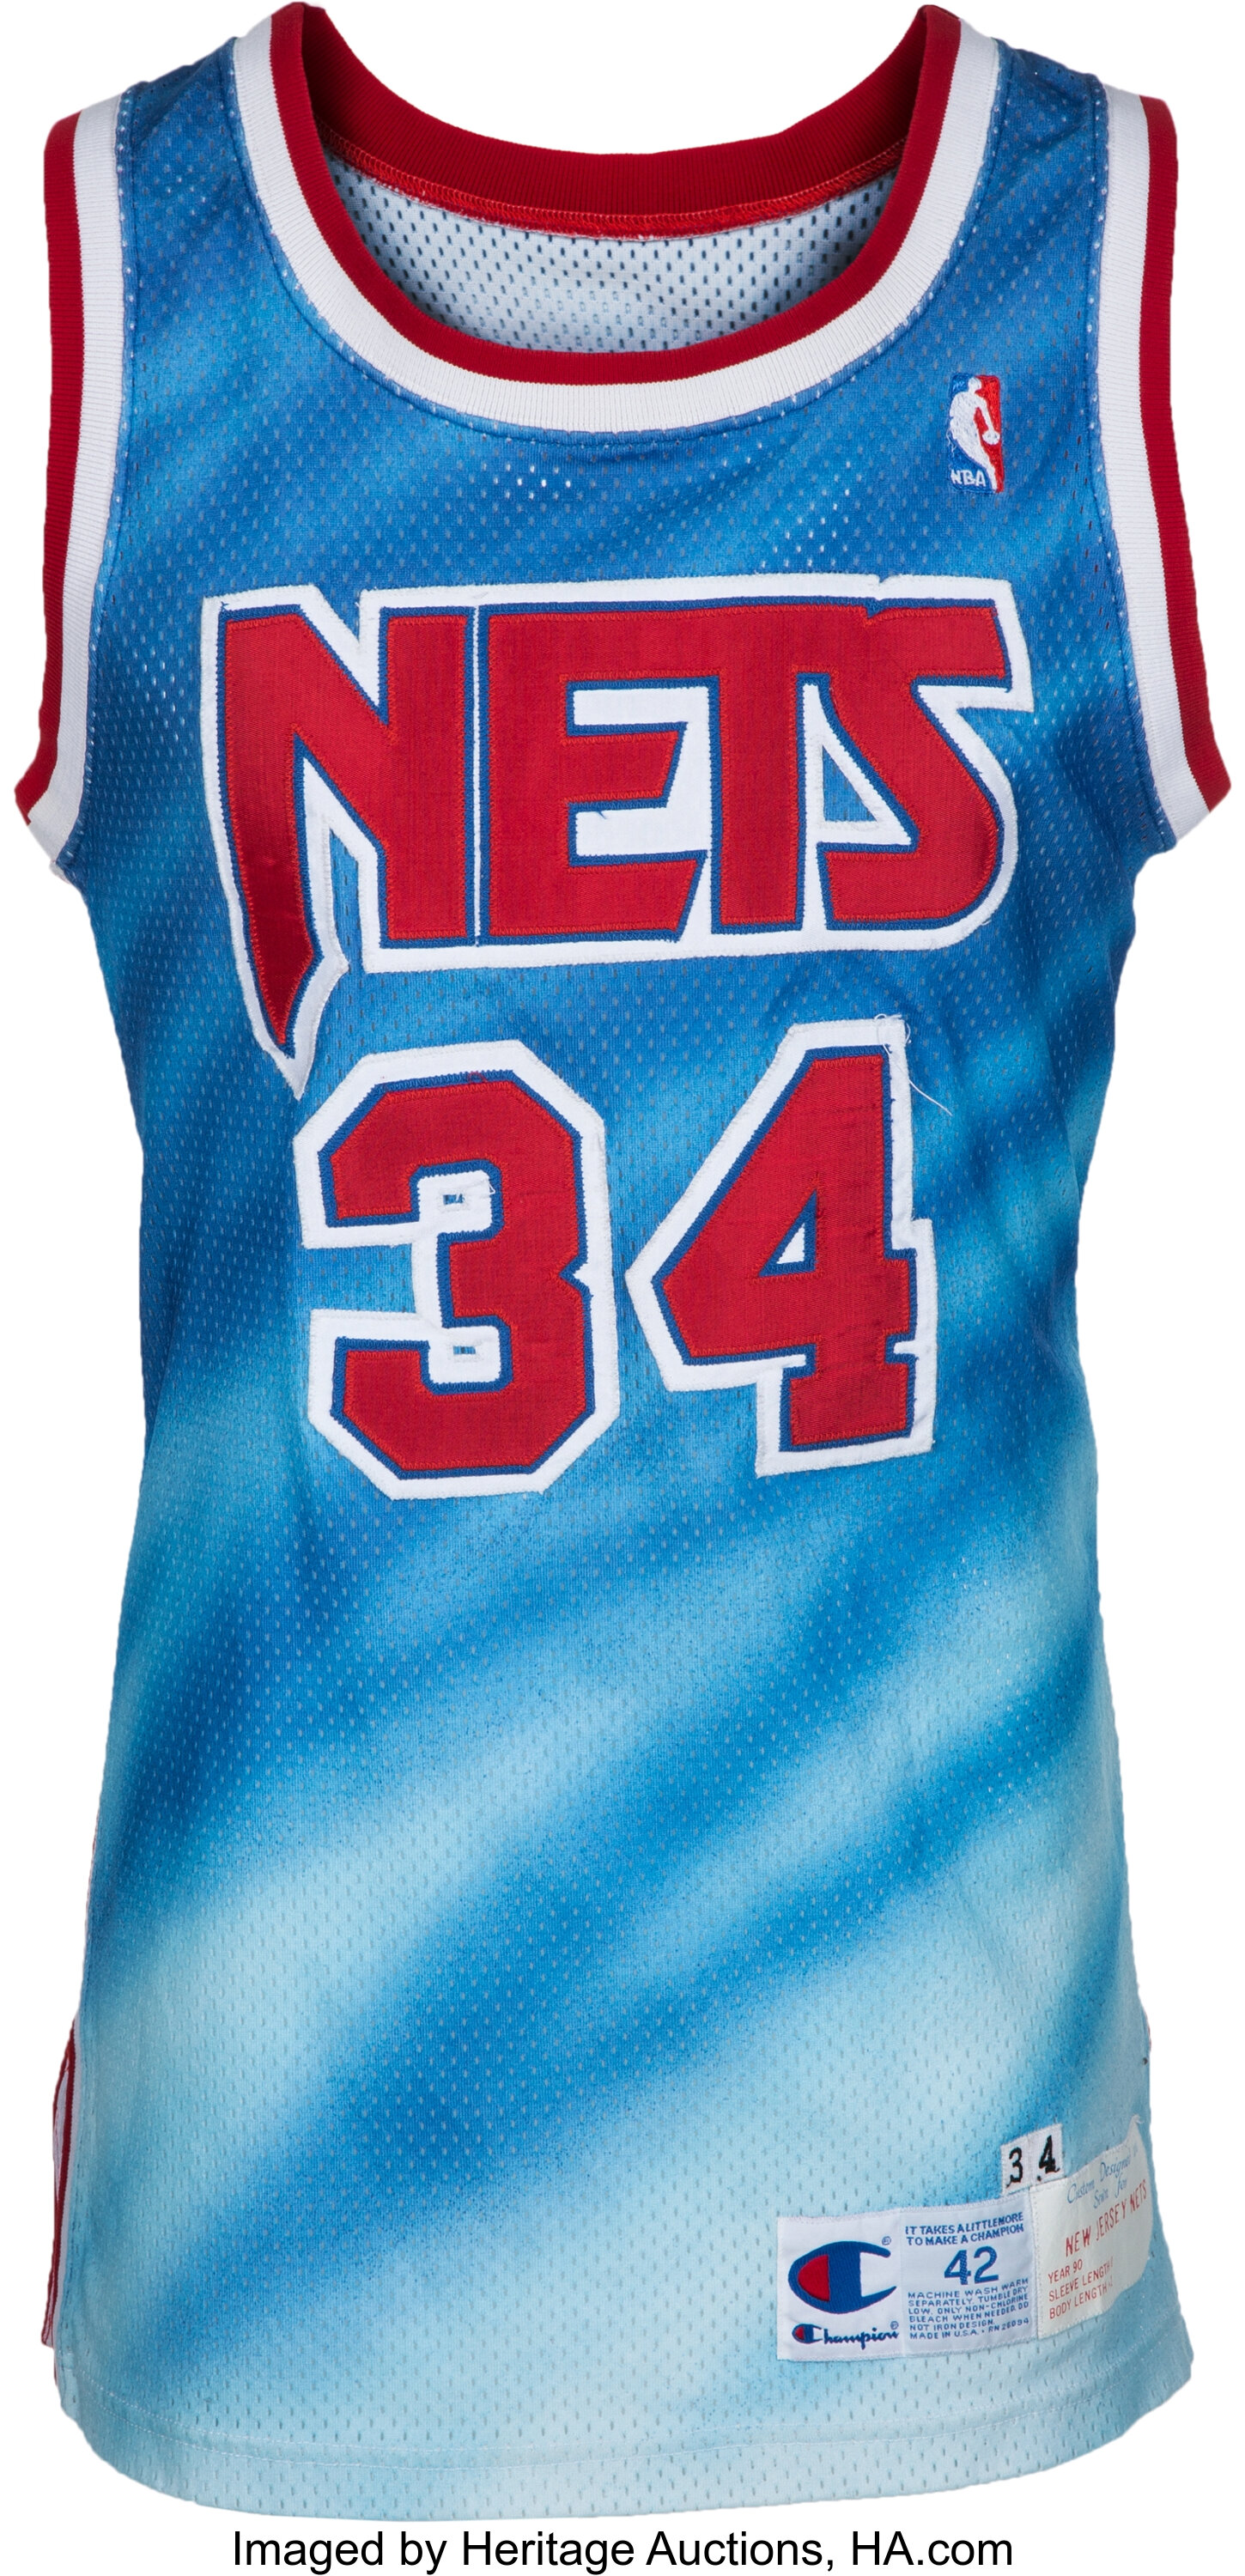 Vintage 1990s New Jersey NJ Nets Tshirt - S/M